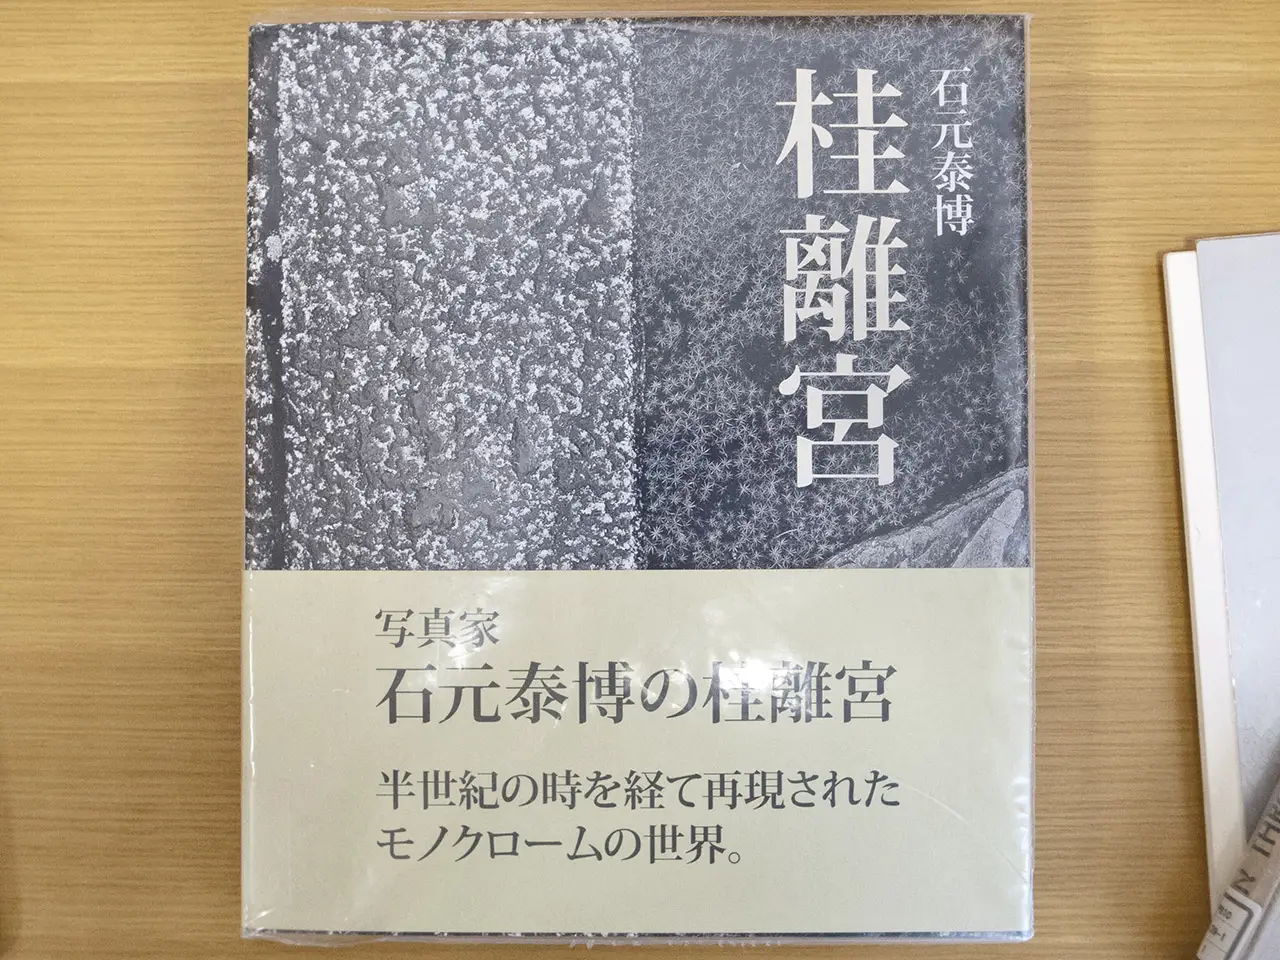 Jesse’s Book Review – Katsura by Yasuhiro Ishimoto